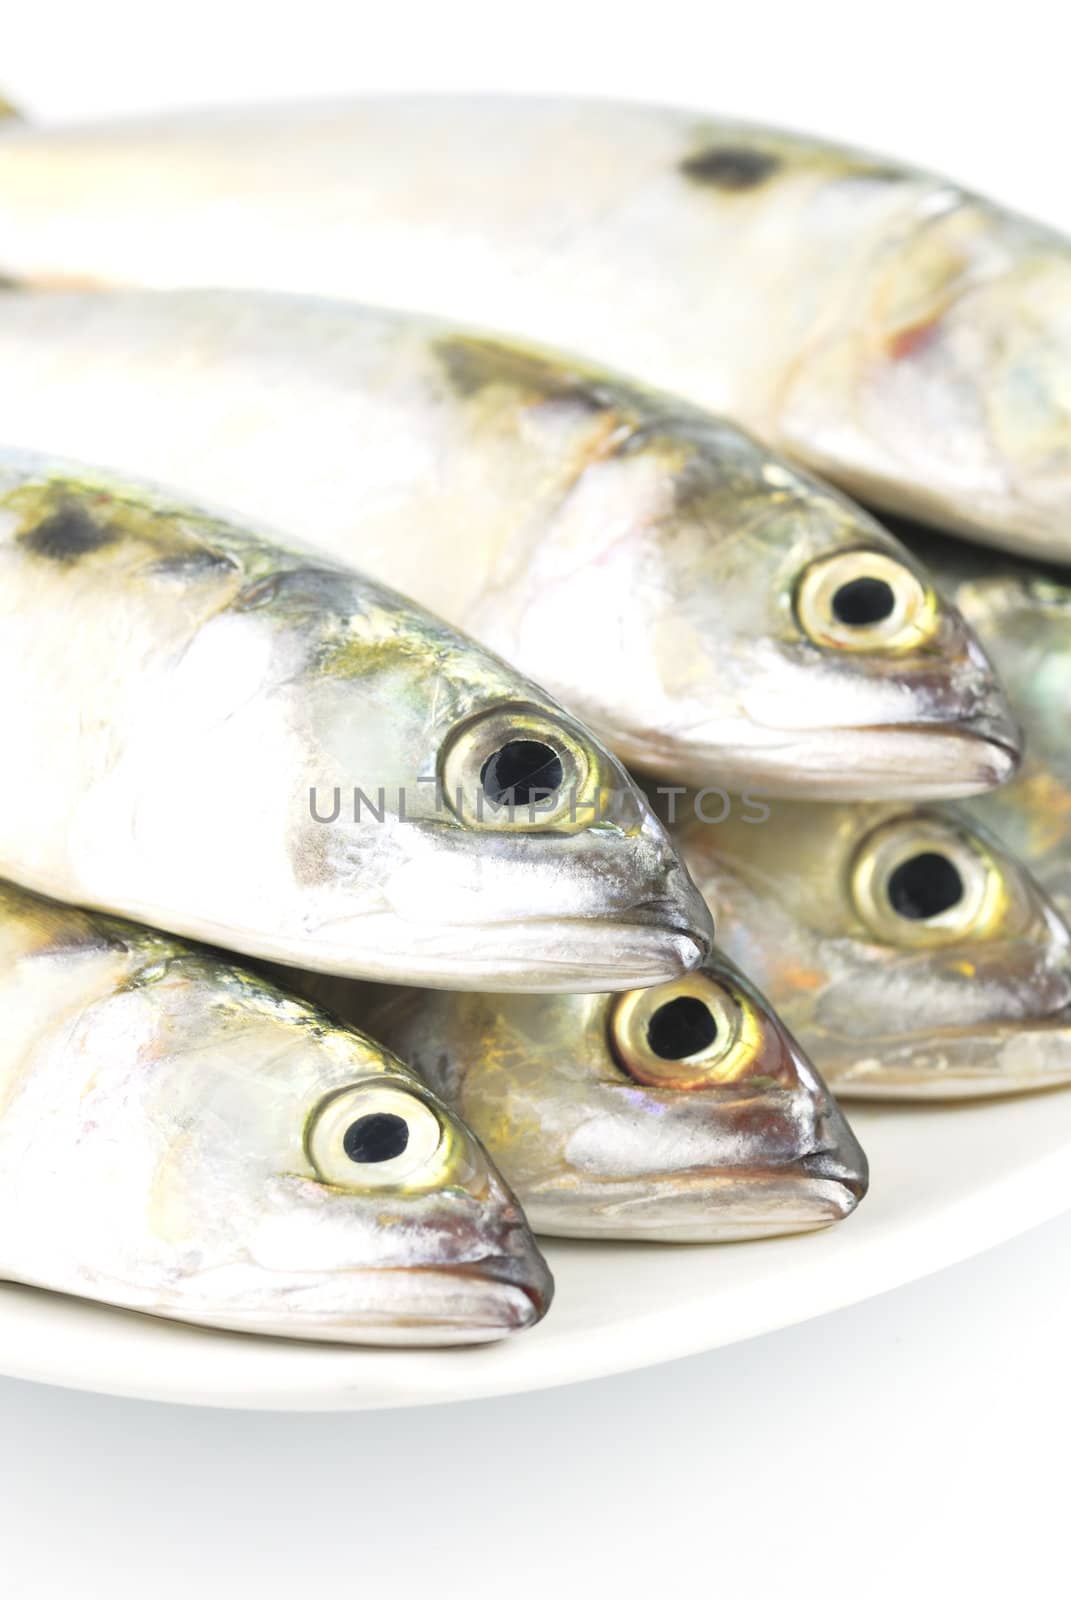 Fresh mackerel fish  by teen00000